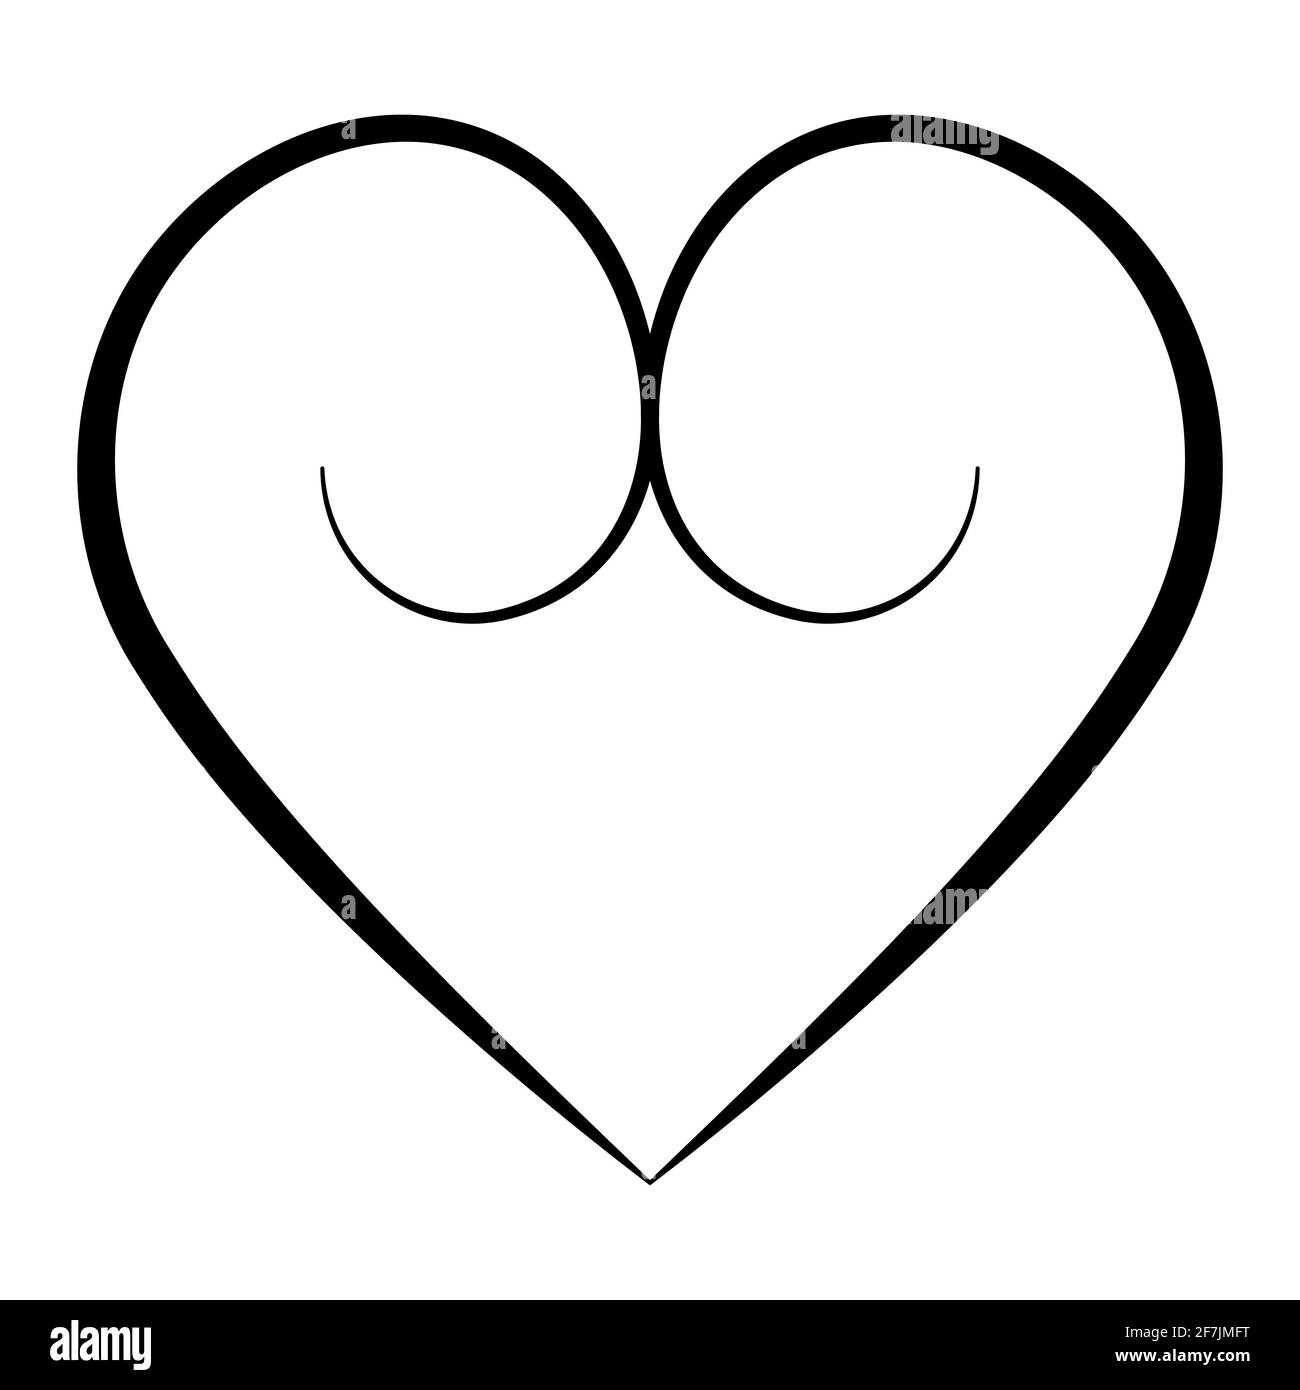 Elegant heart with calligraphic contours, vector buttocks heart shape with calligraphic swirls symbol love Stock Vector